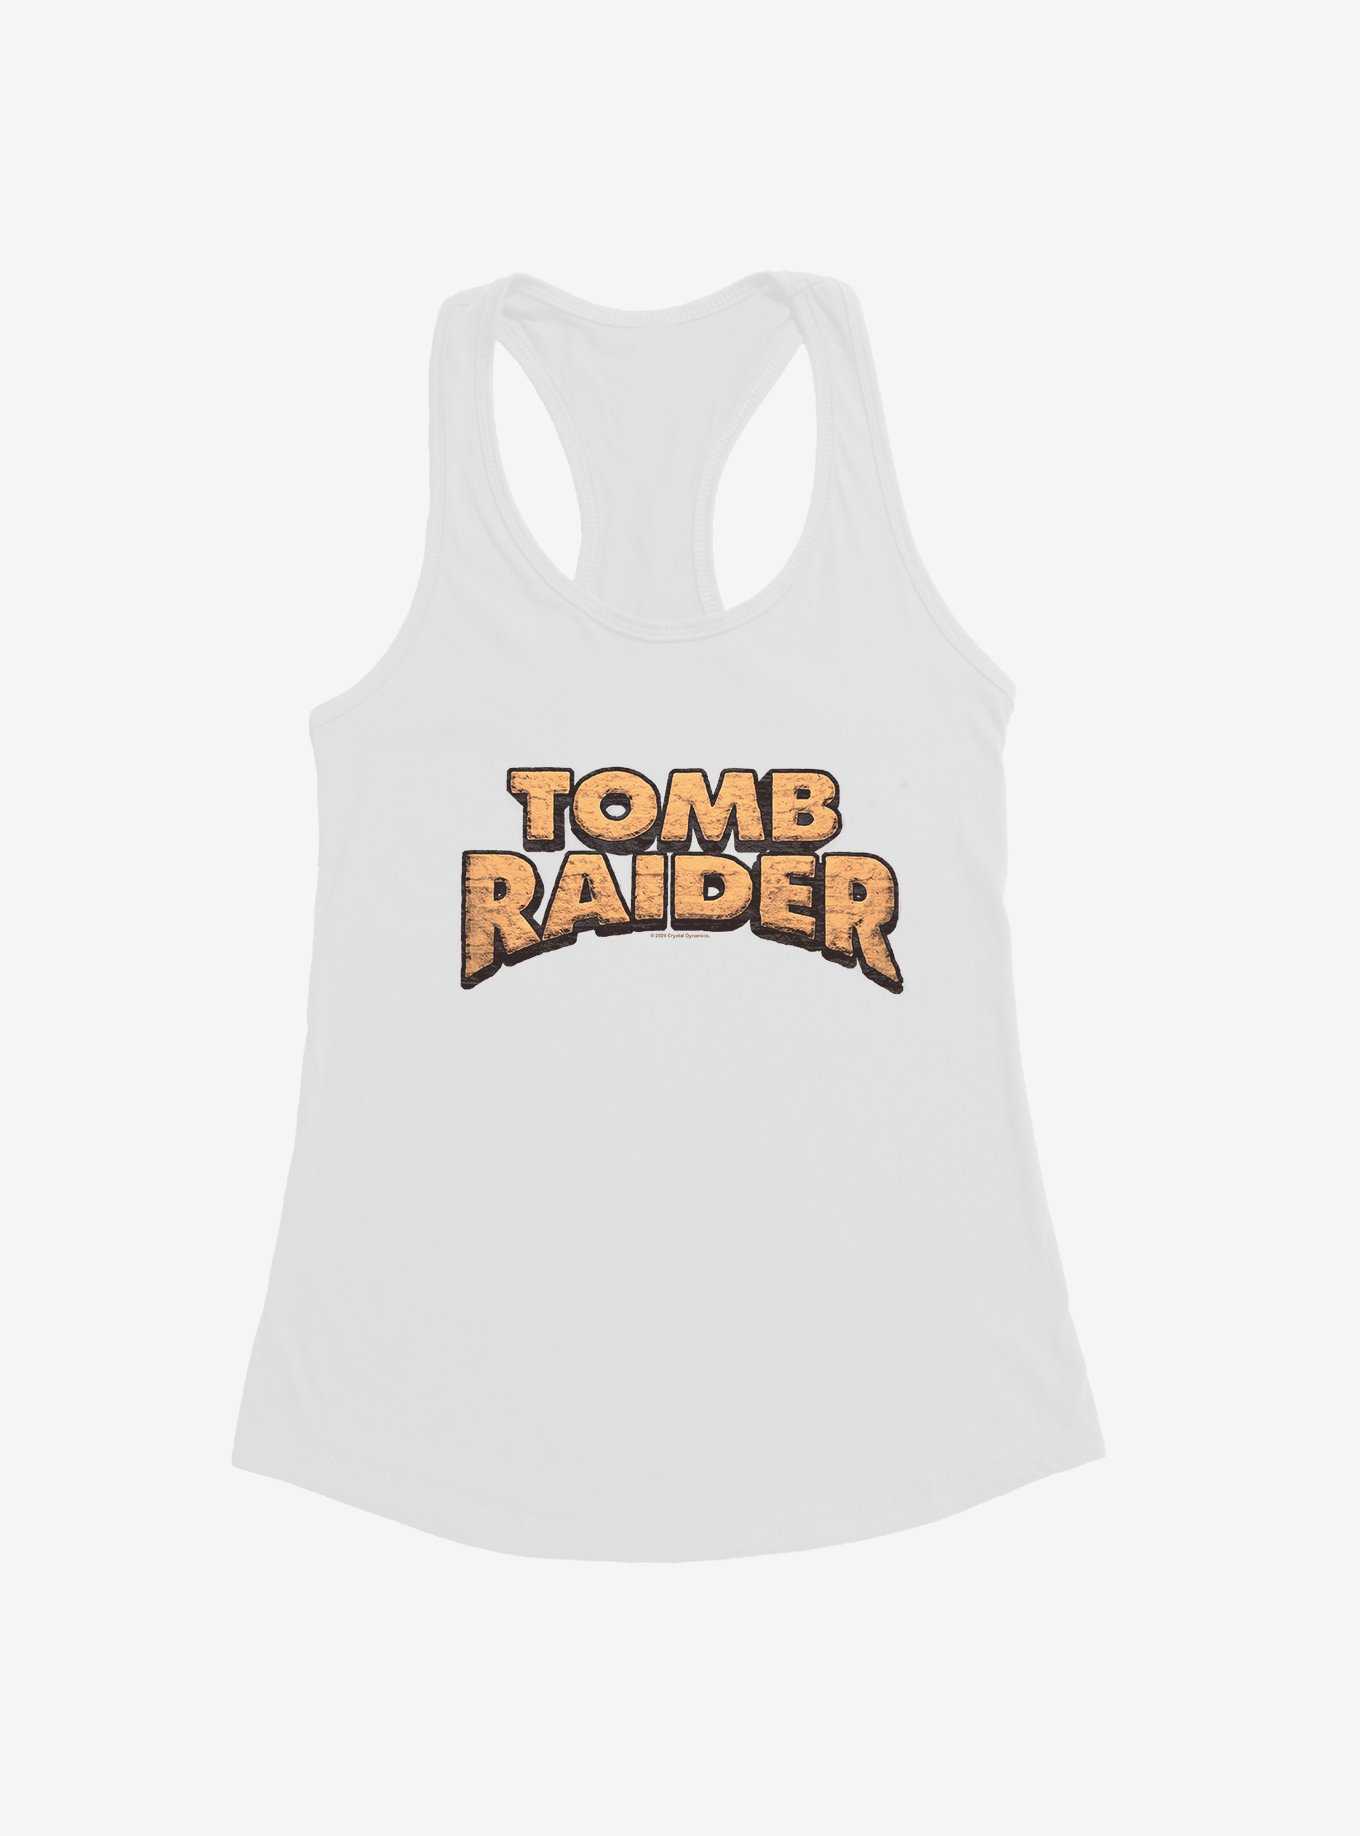 Tomb Raider 1996 Game Cover Girls Tank, , hi-res